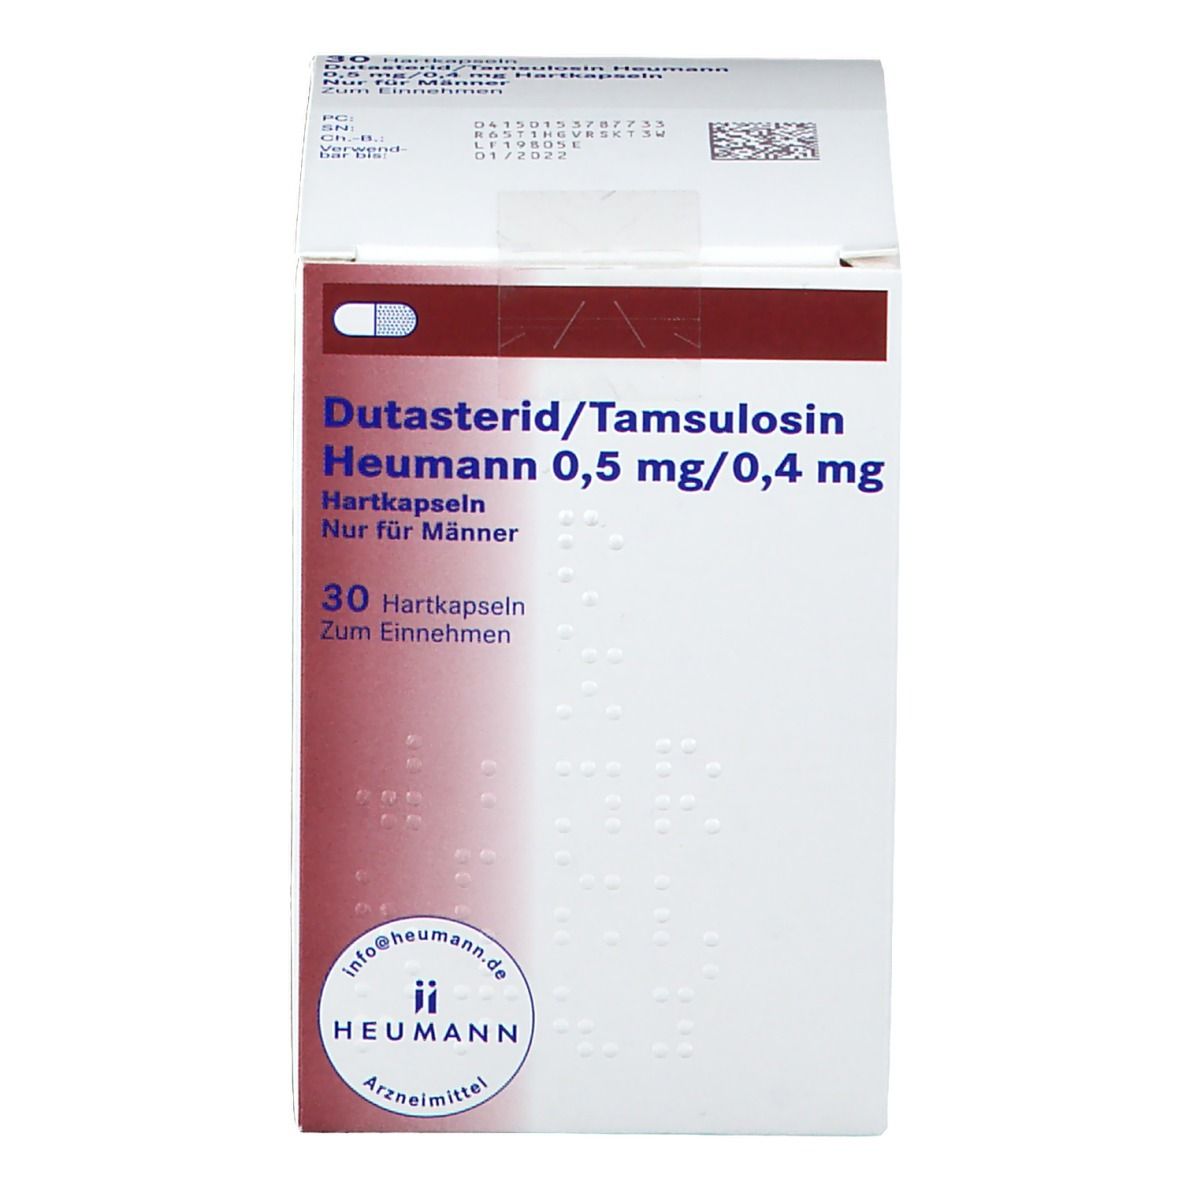 Dutasterid/Tamsulosin Heumann 0,5 mg/0,4 mg